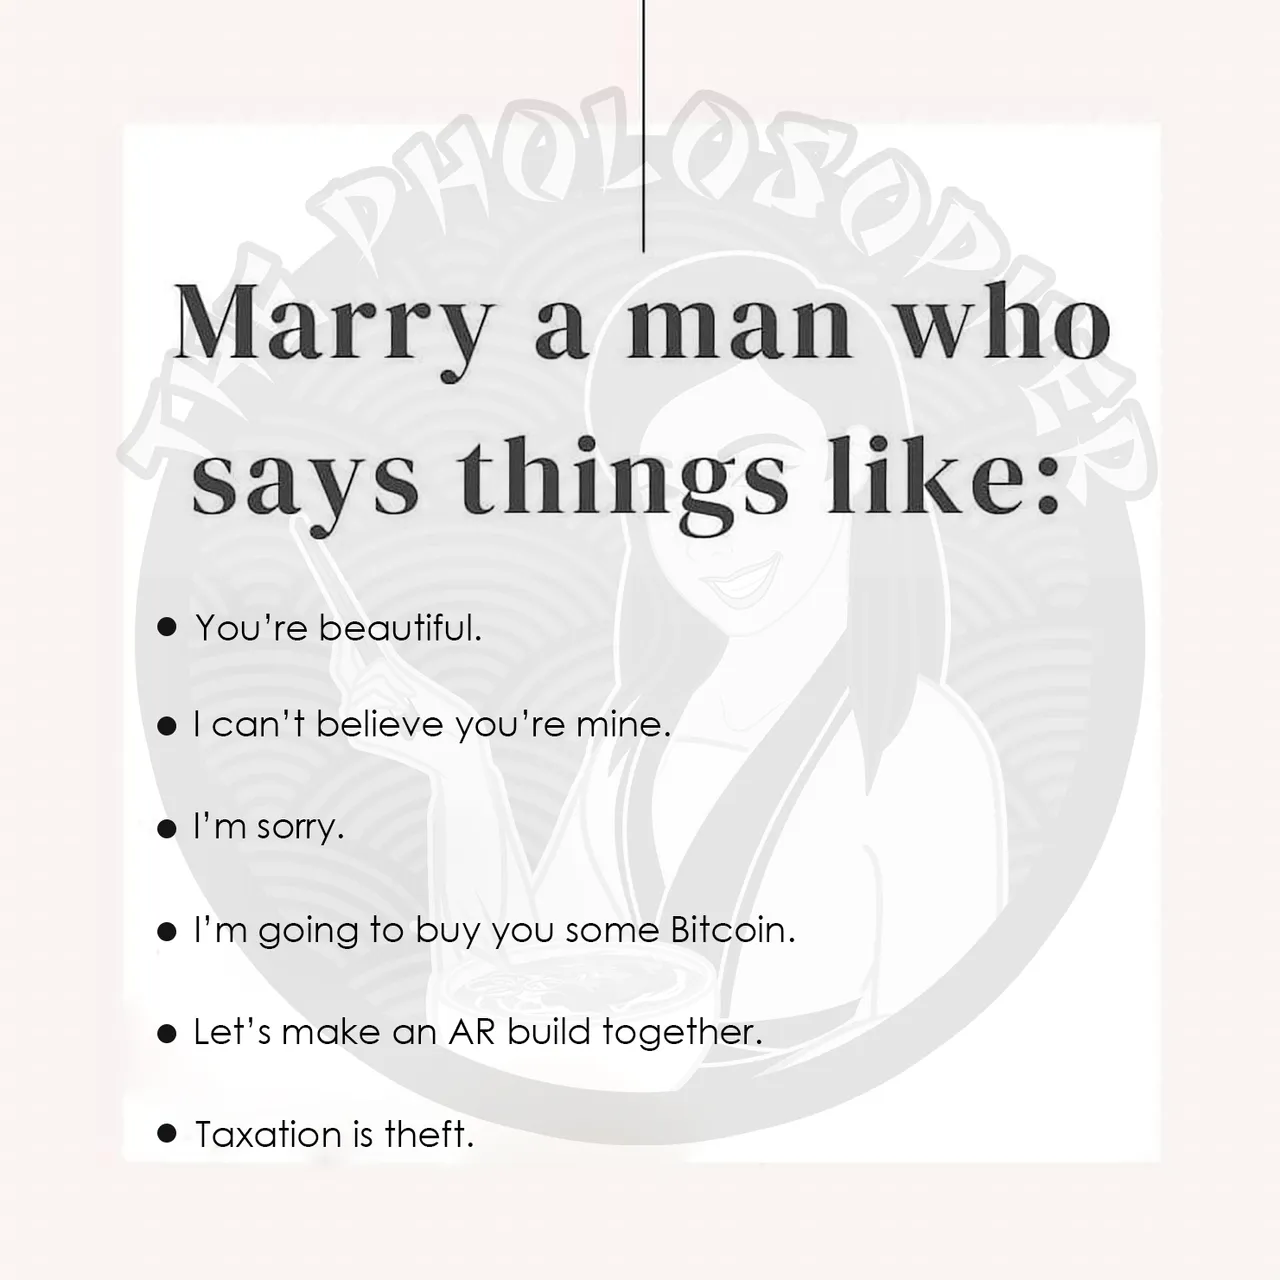 marry_a_man_who.jpg